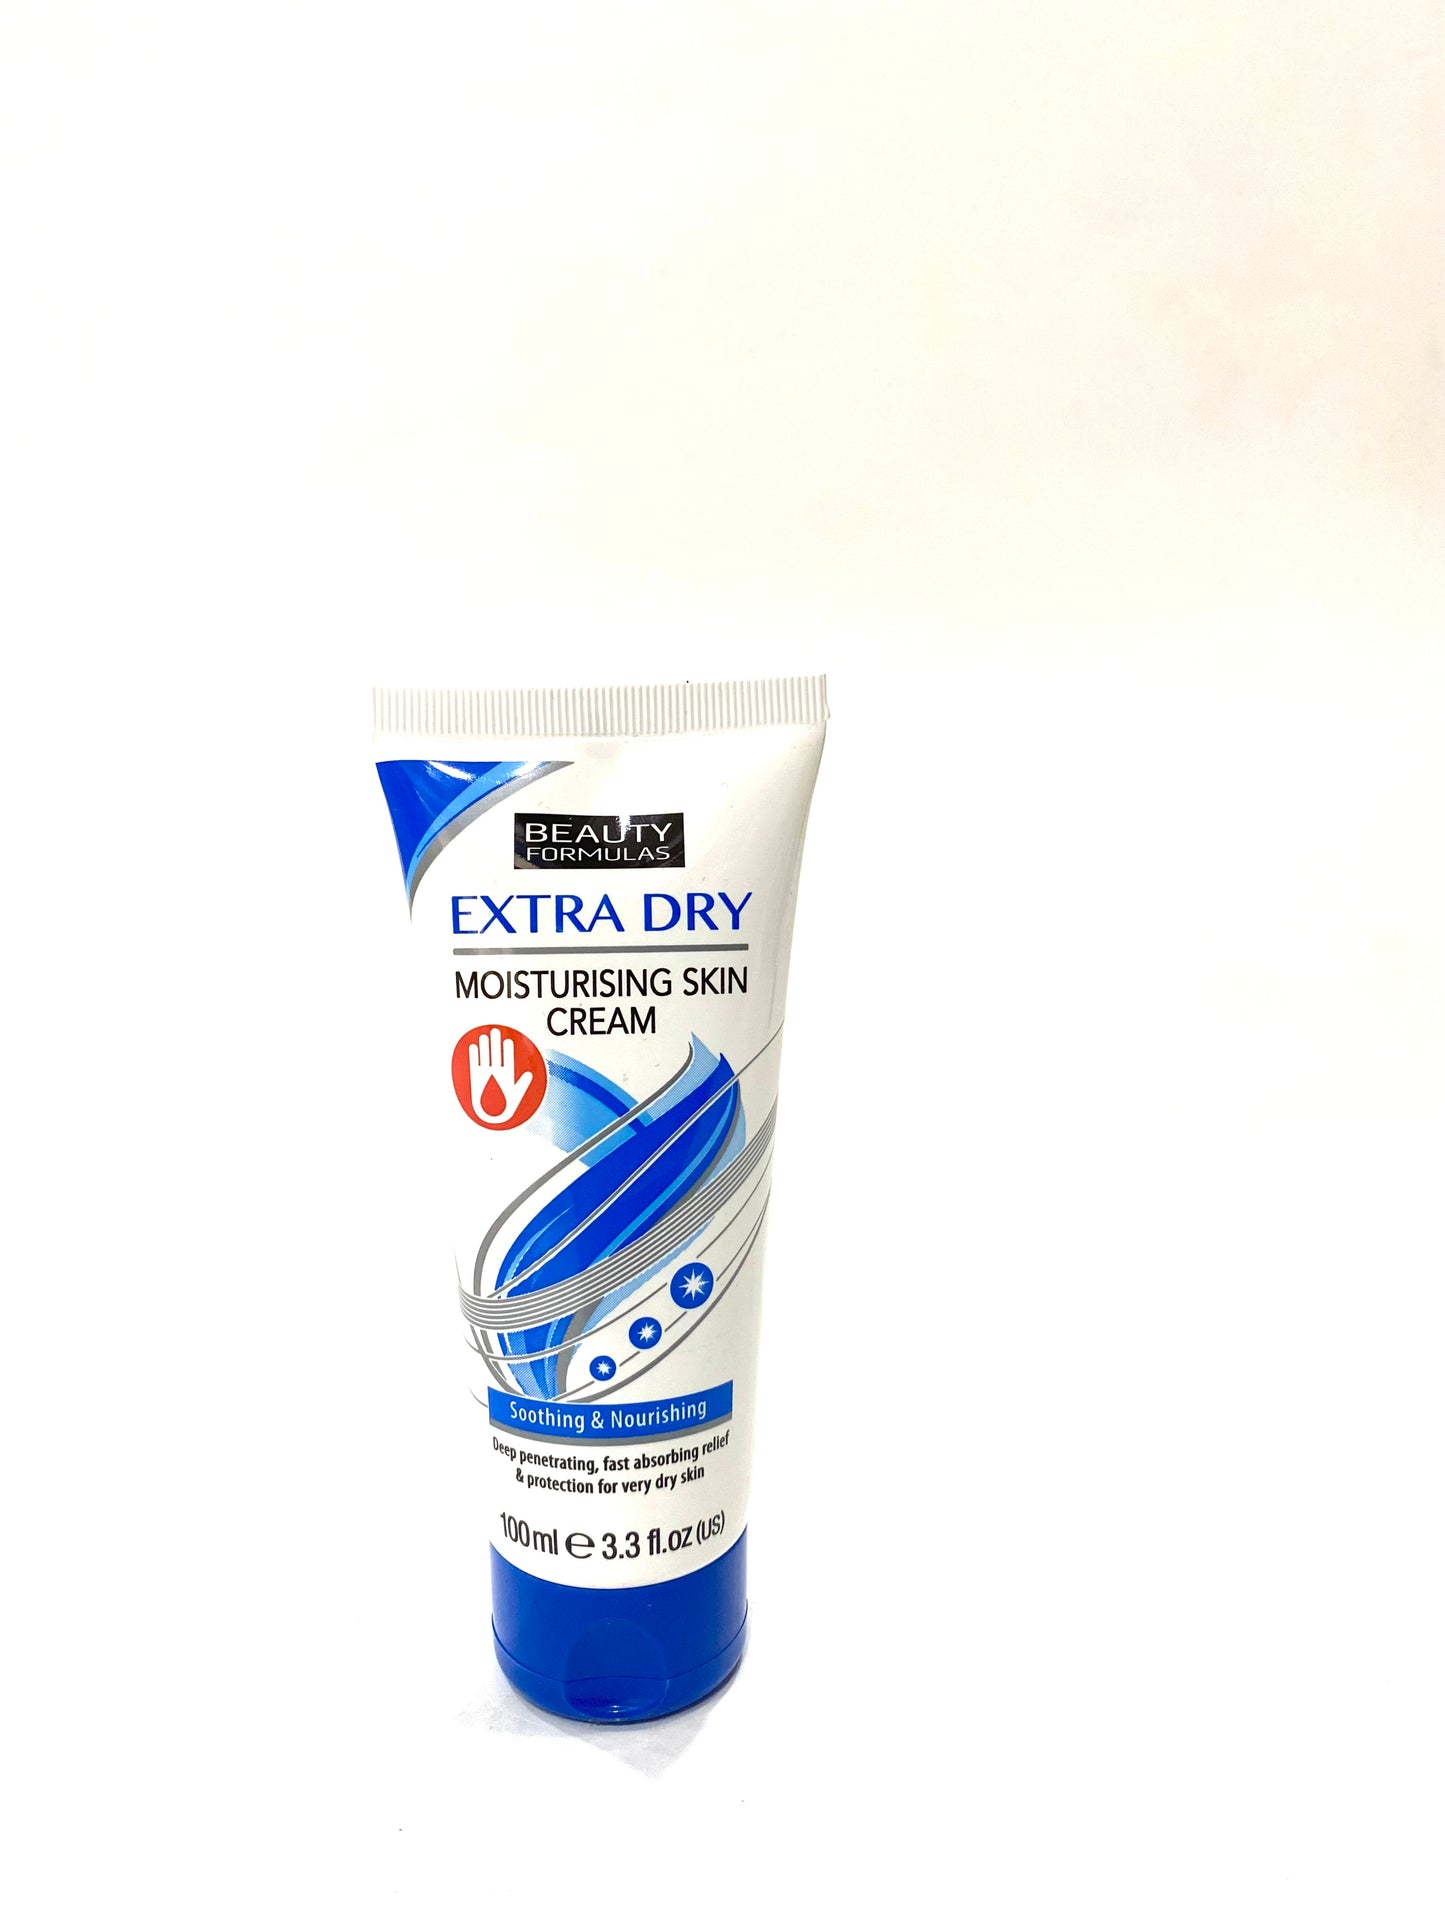 Beauty Formulas Extra Dry Moisturising cream